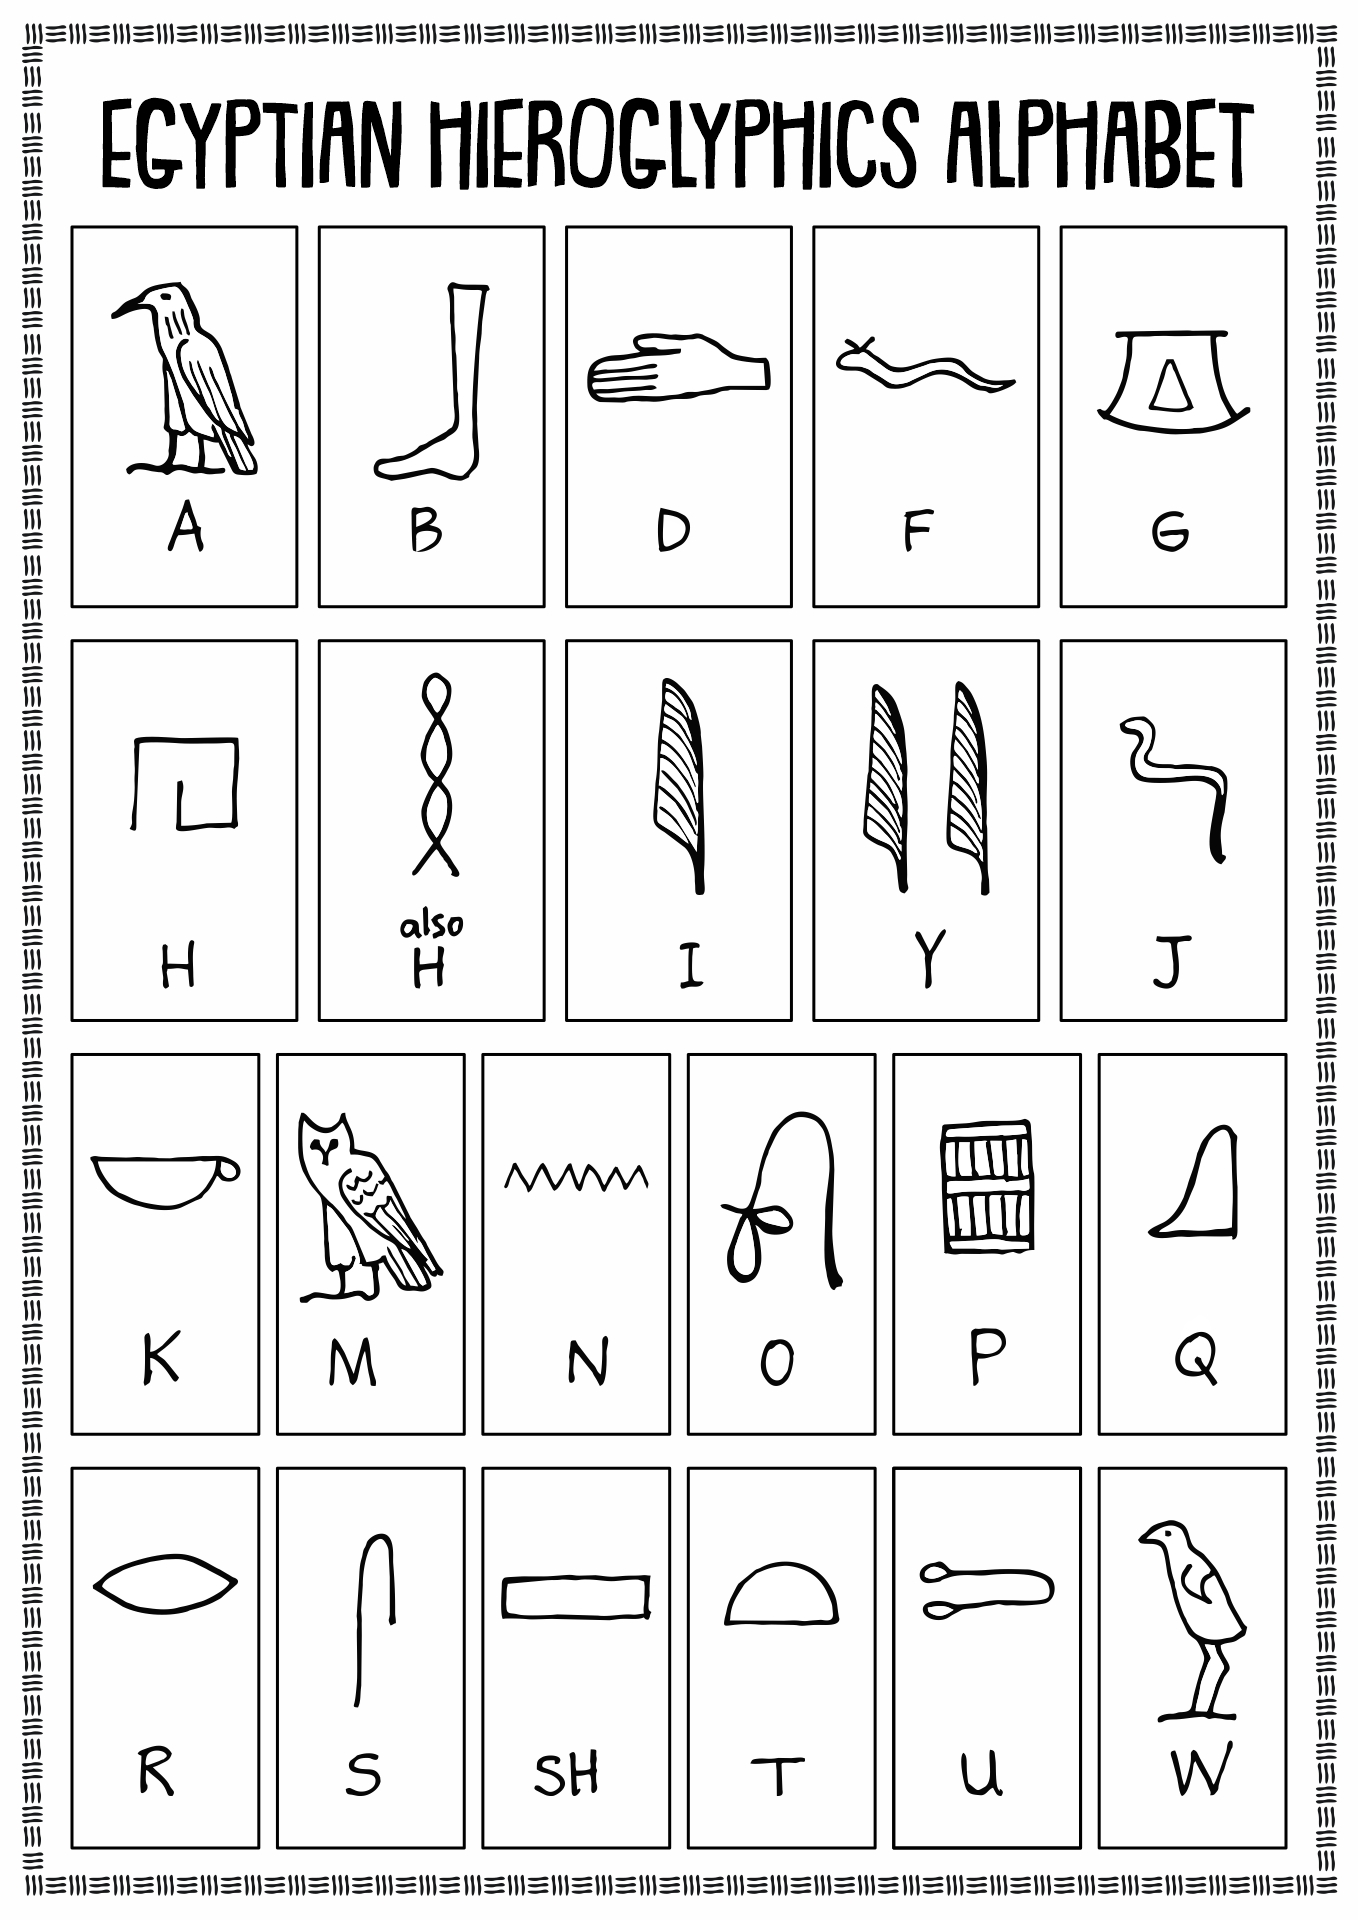 Egyptian Hieroglyphics Alphabet Translator Image